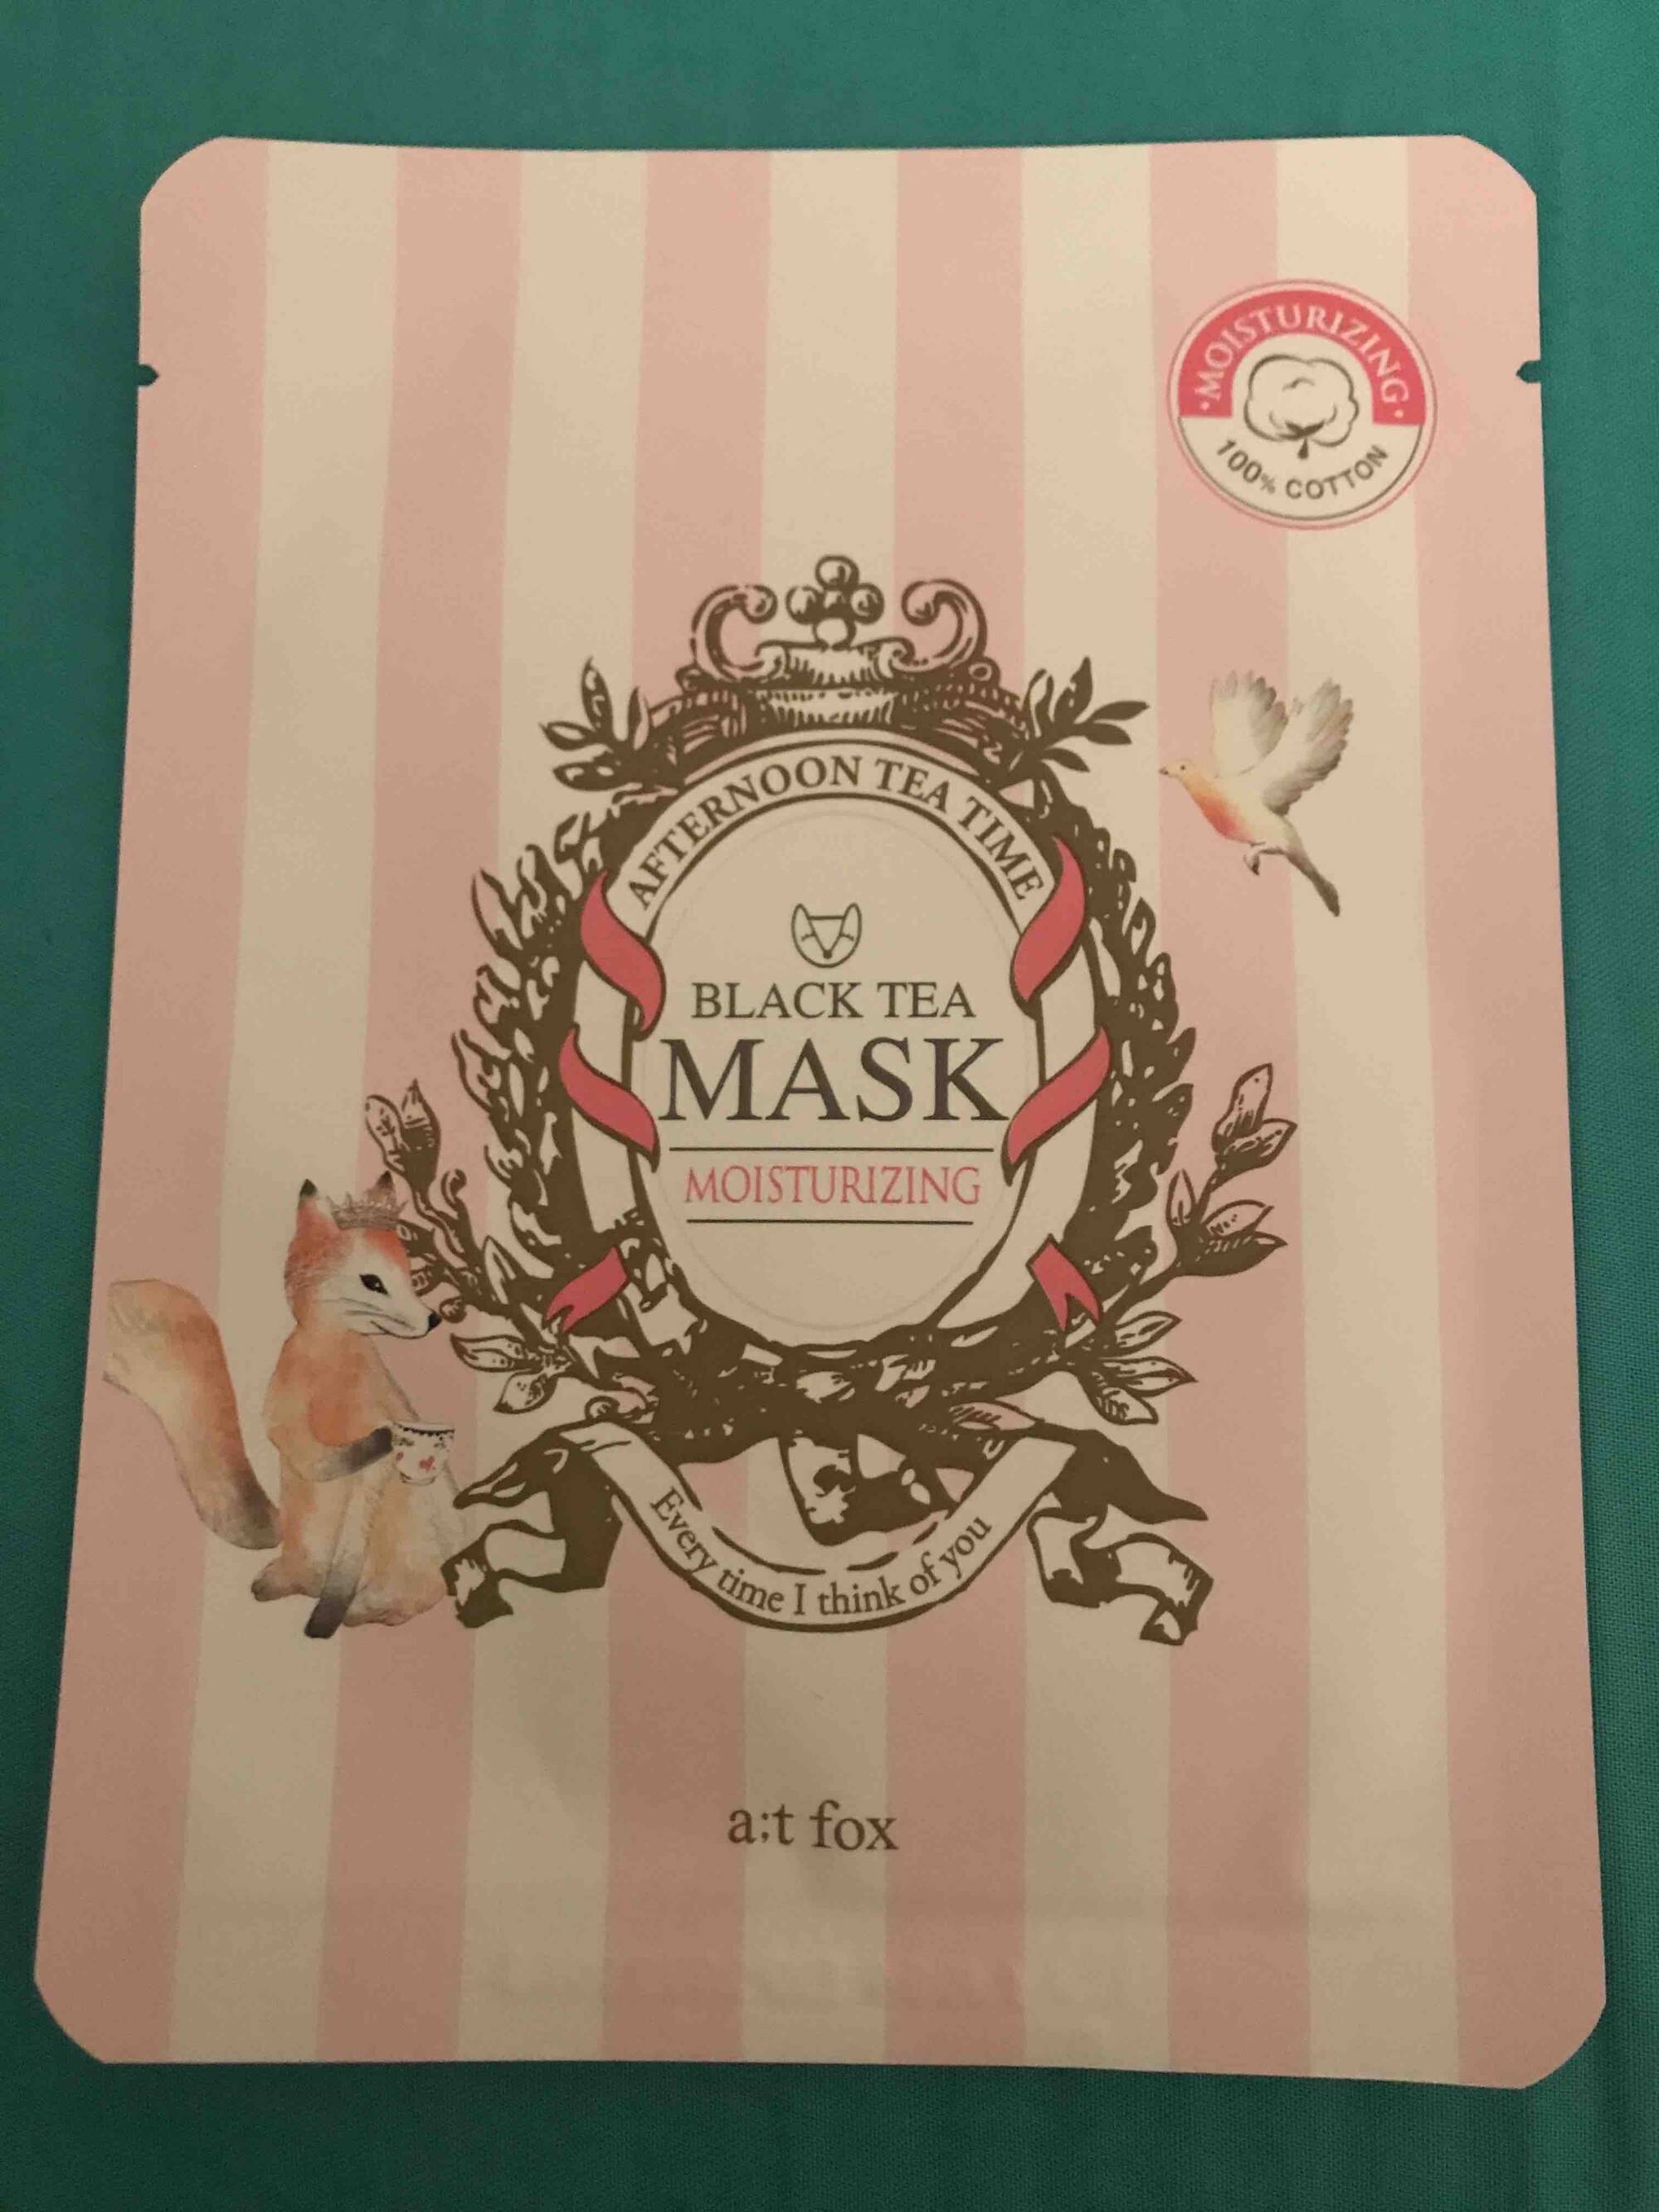 A:T FOX - Mask moisturizing black tea